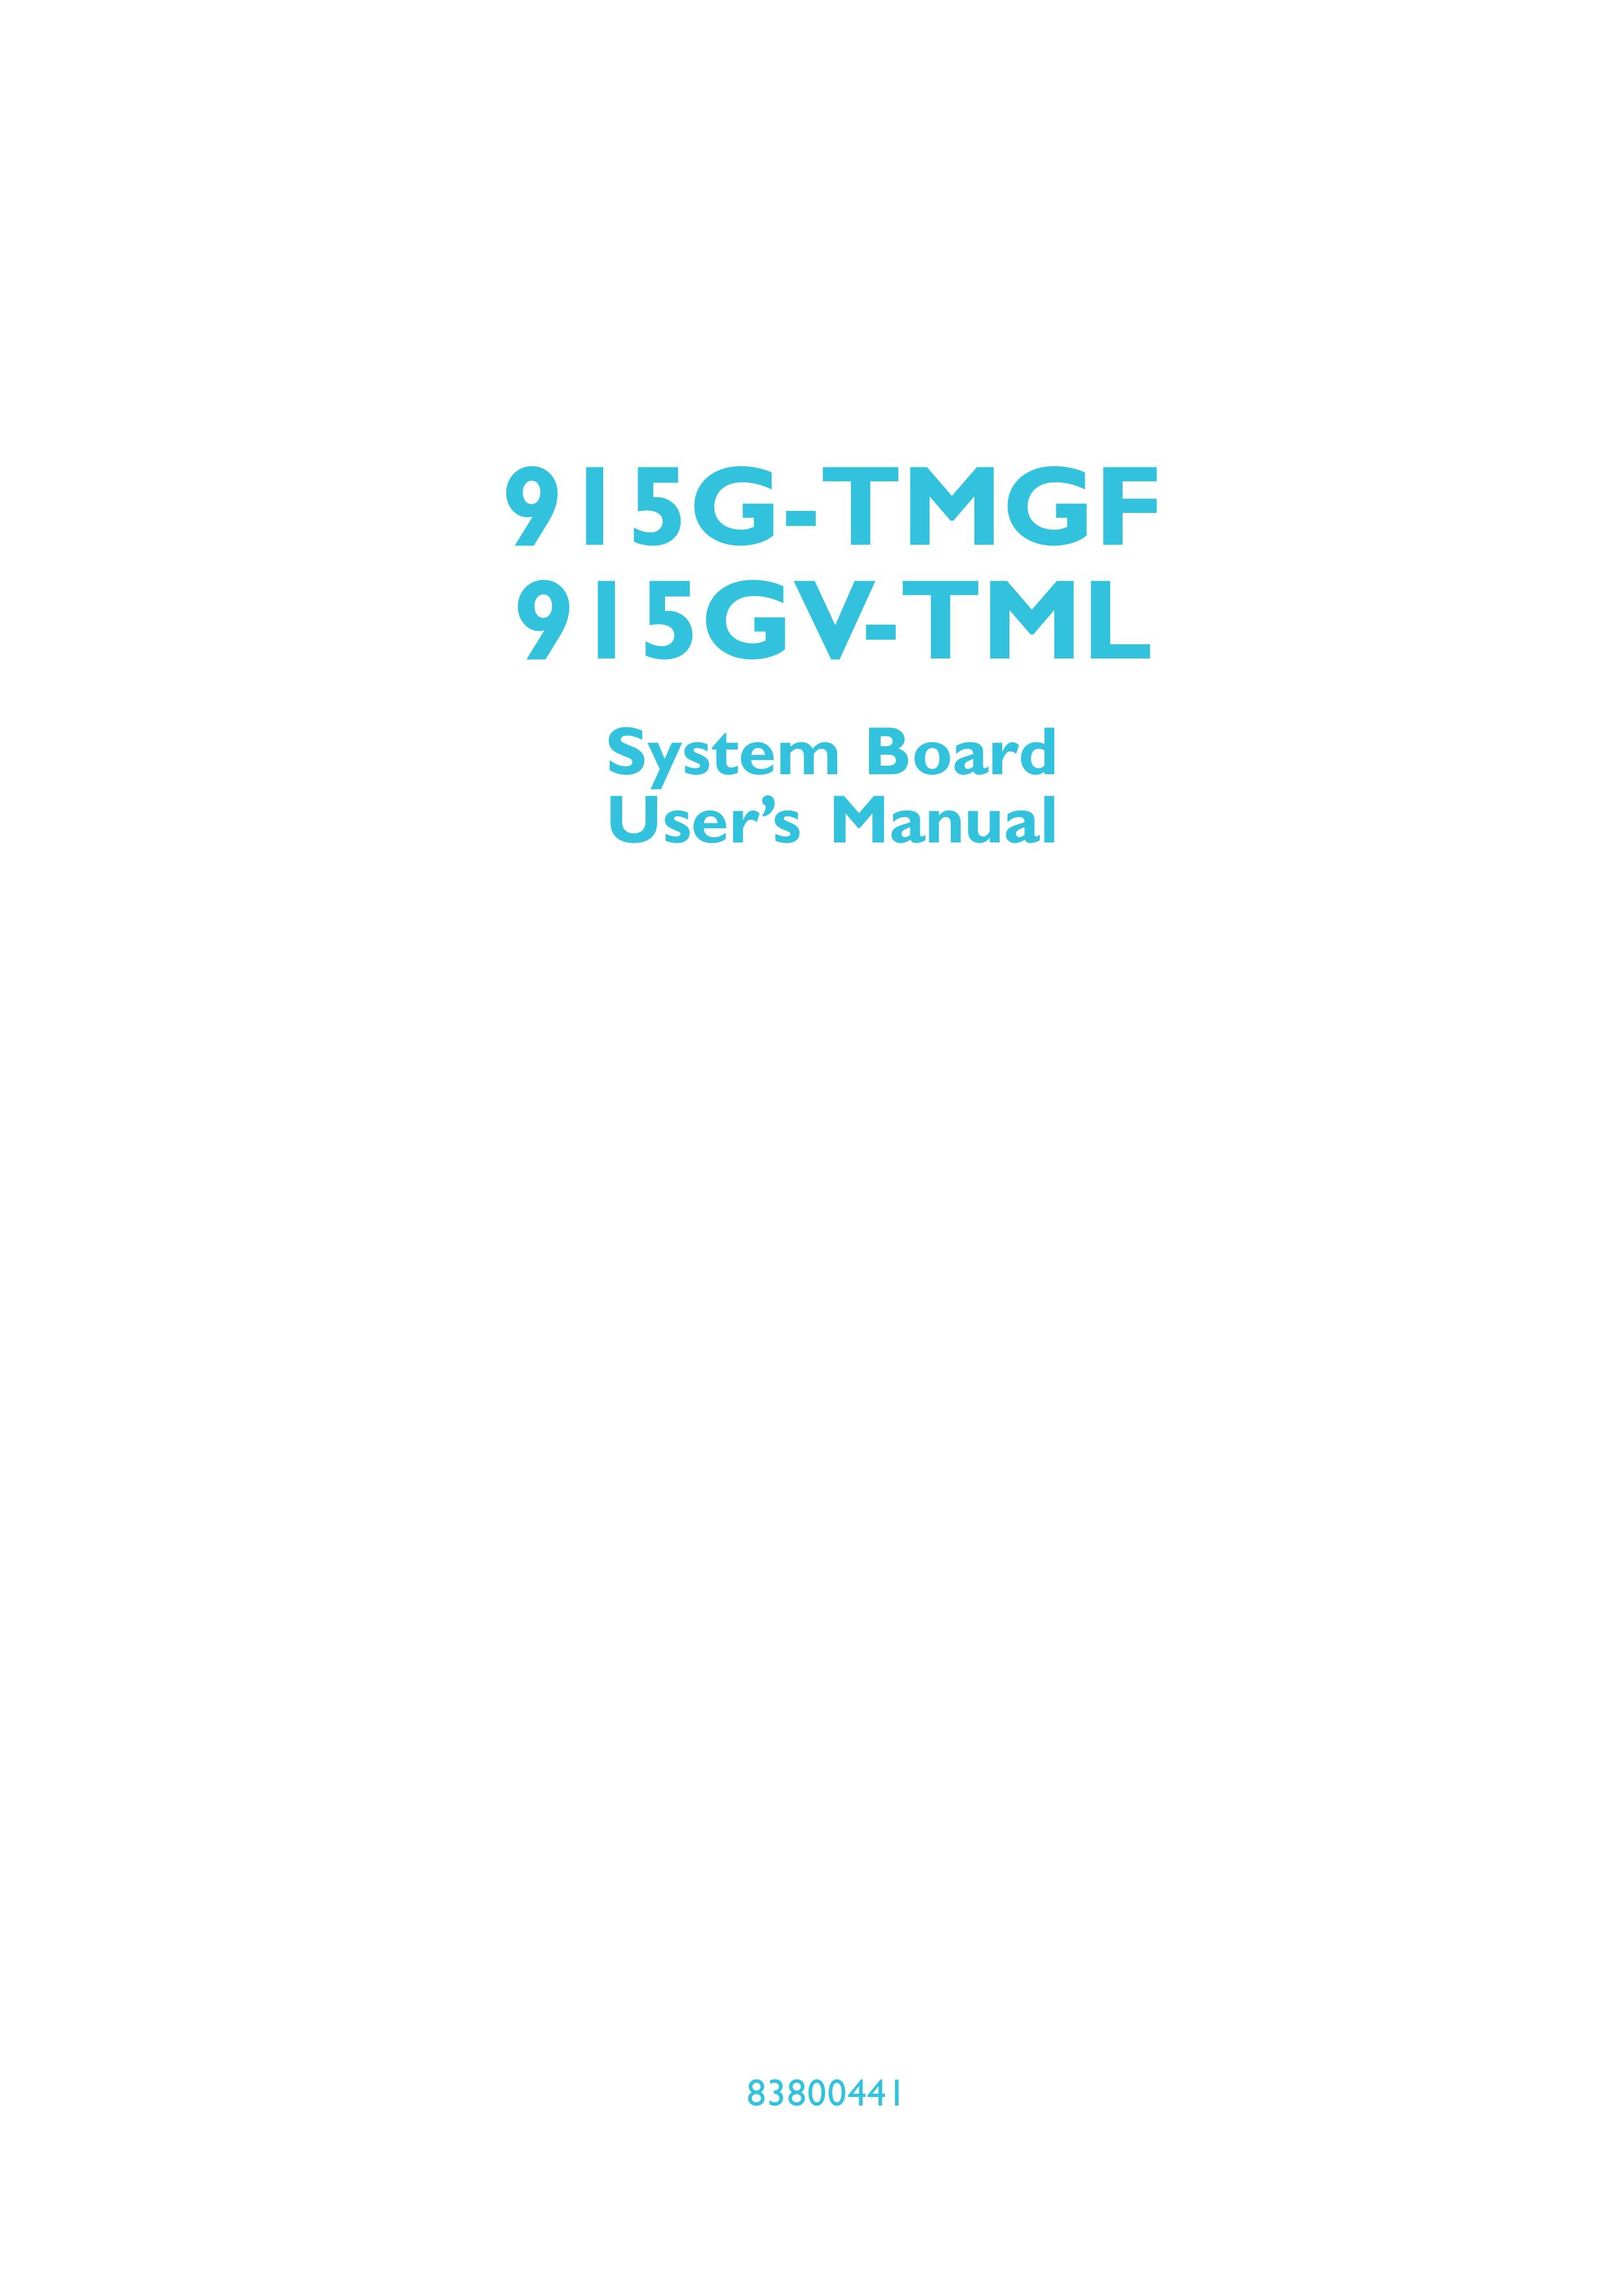 DFI 915gv-tml Computer Hardware User Manual